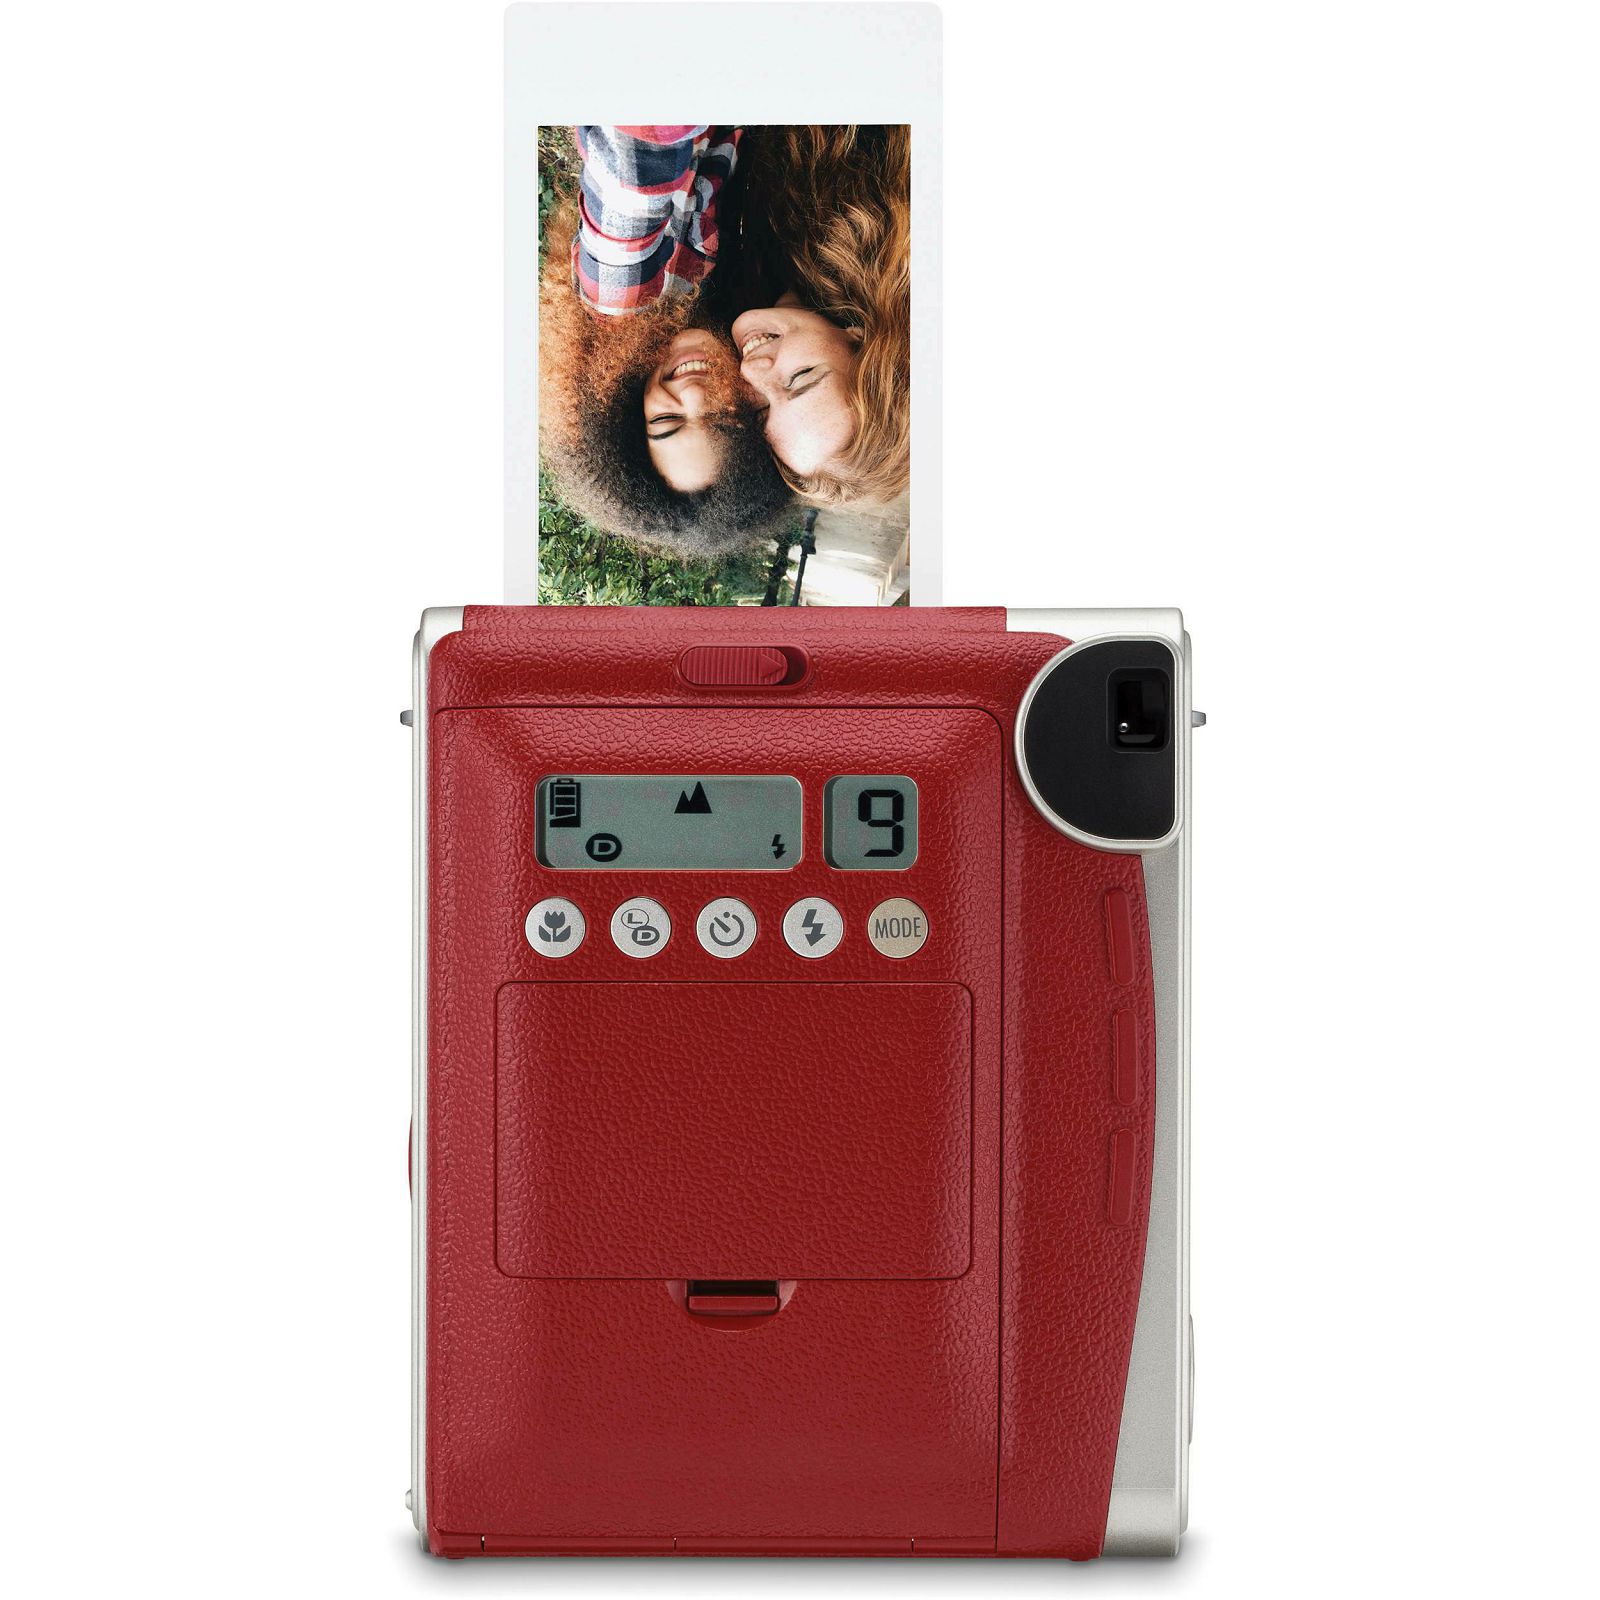 Fujifilm Instax Mini 90 Neo Classic Red camera Fuji crveni polaroid instant fotoaparat